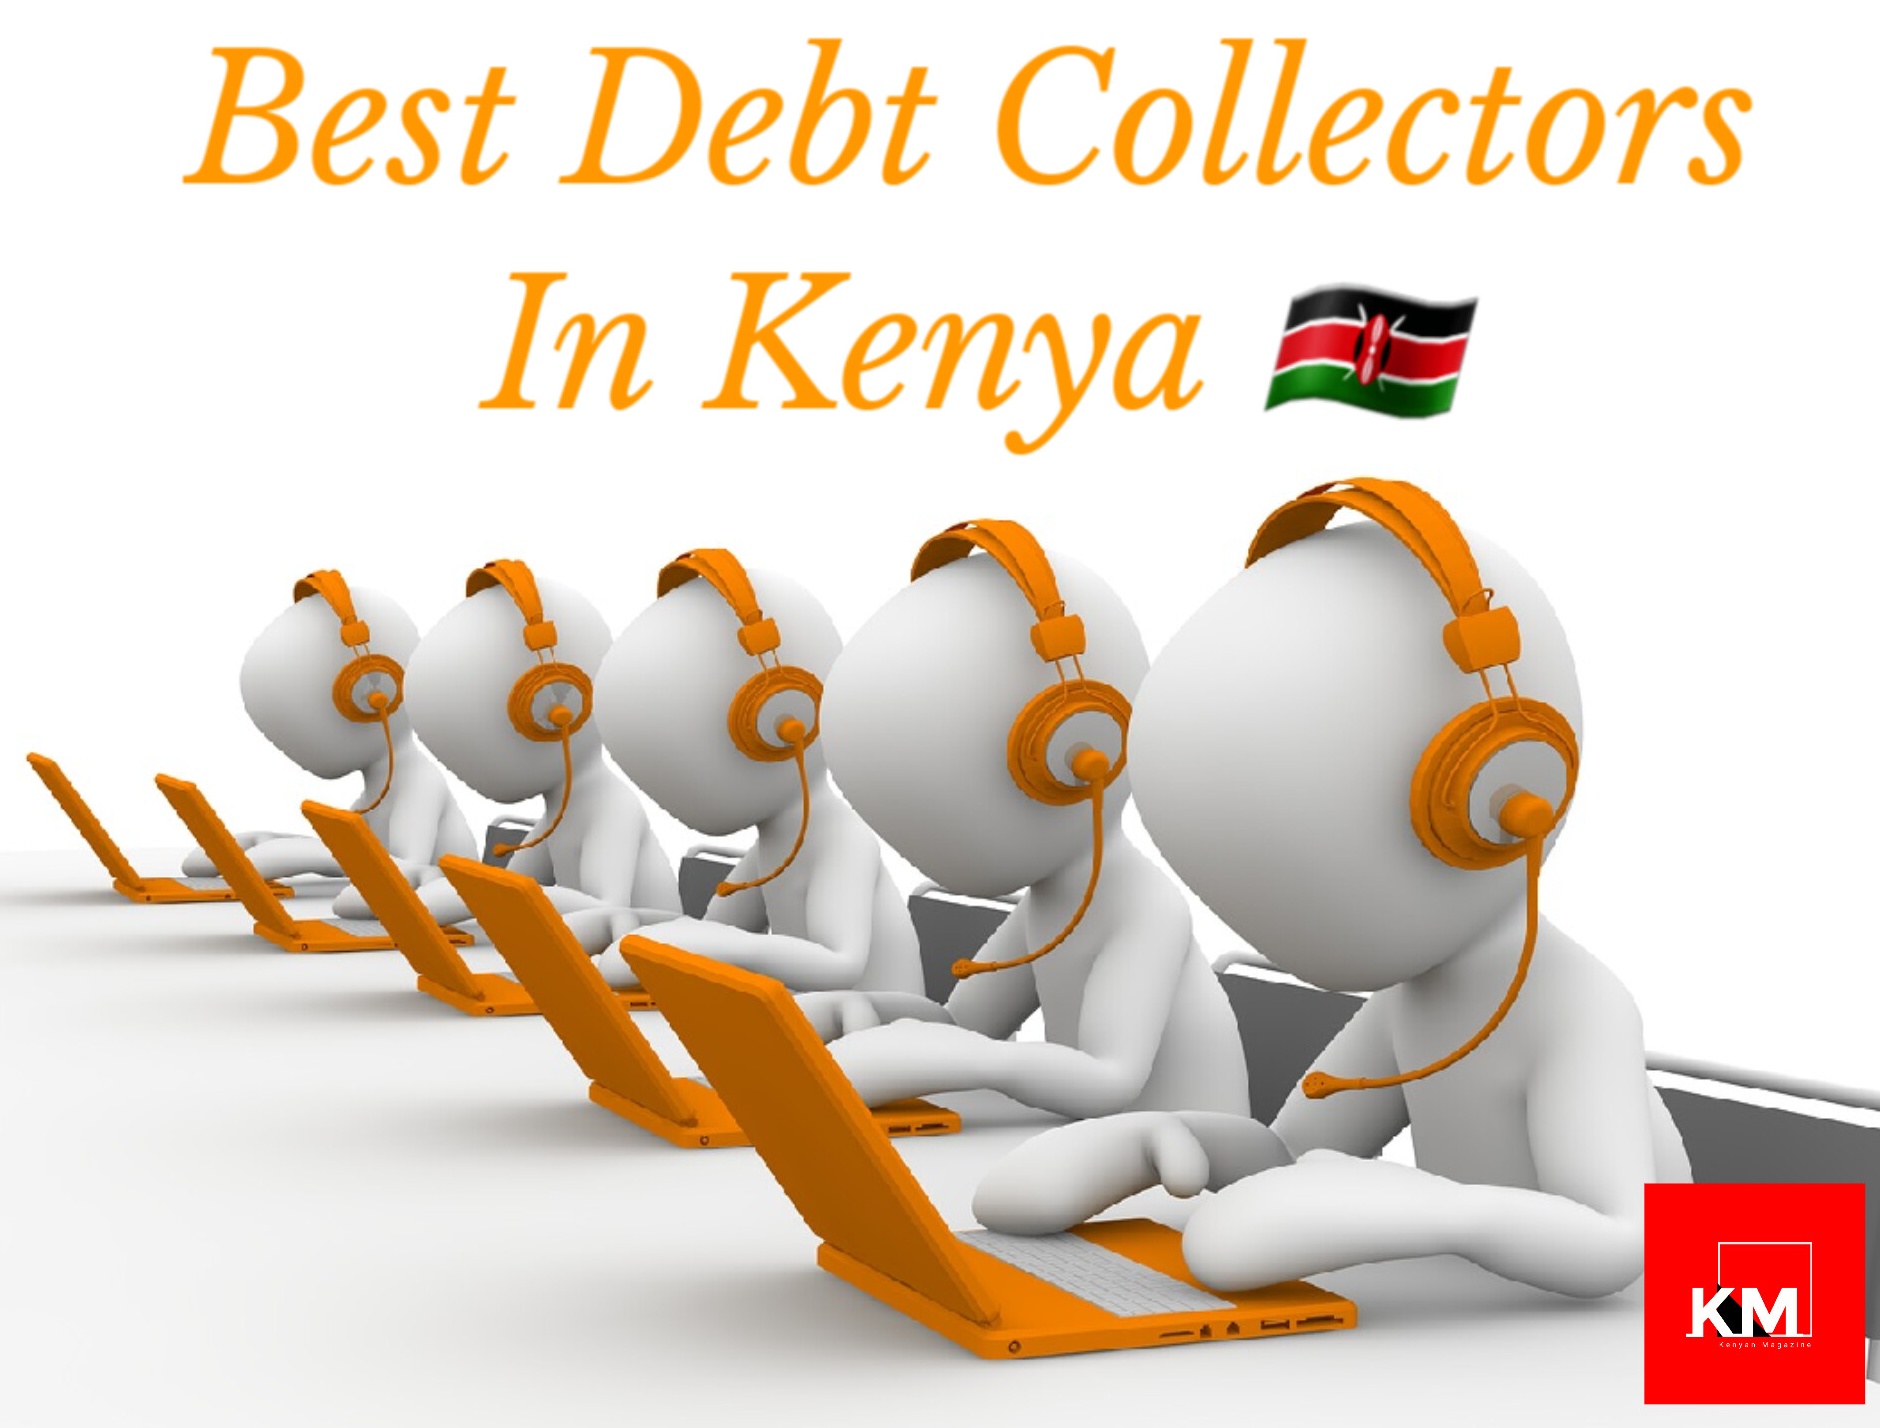 Debt Collectors agency in Kenya